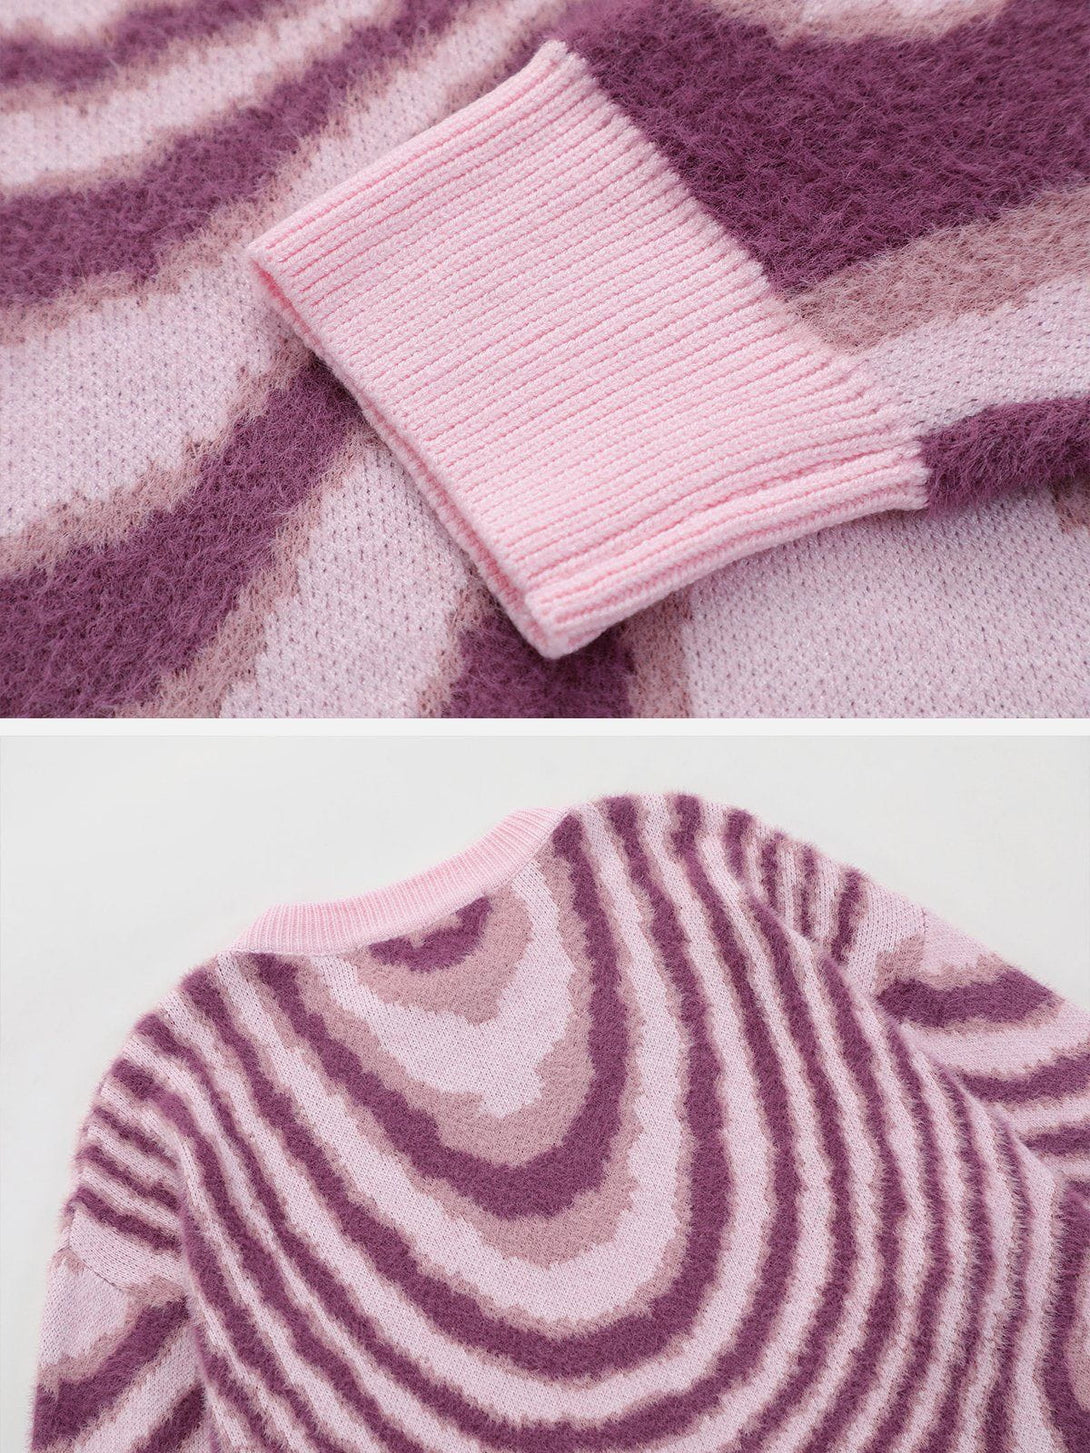 Majesda® - Irregular Stripes Embroidery Sweater outfit ideas streetwear fashion